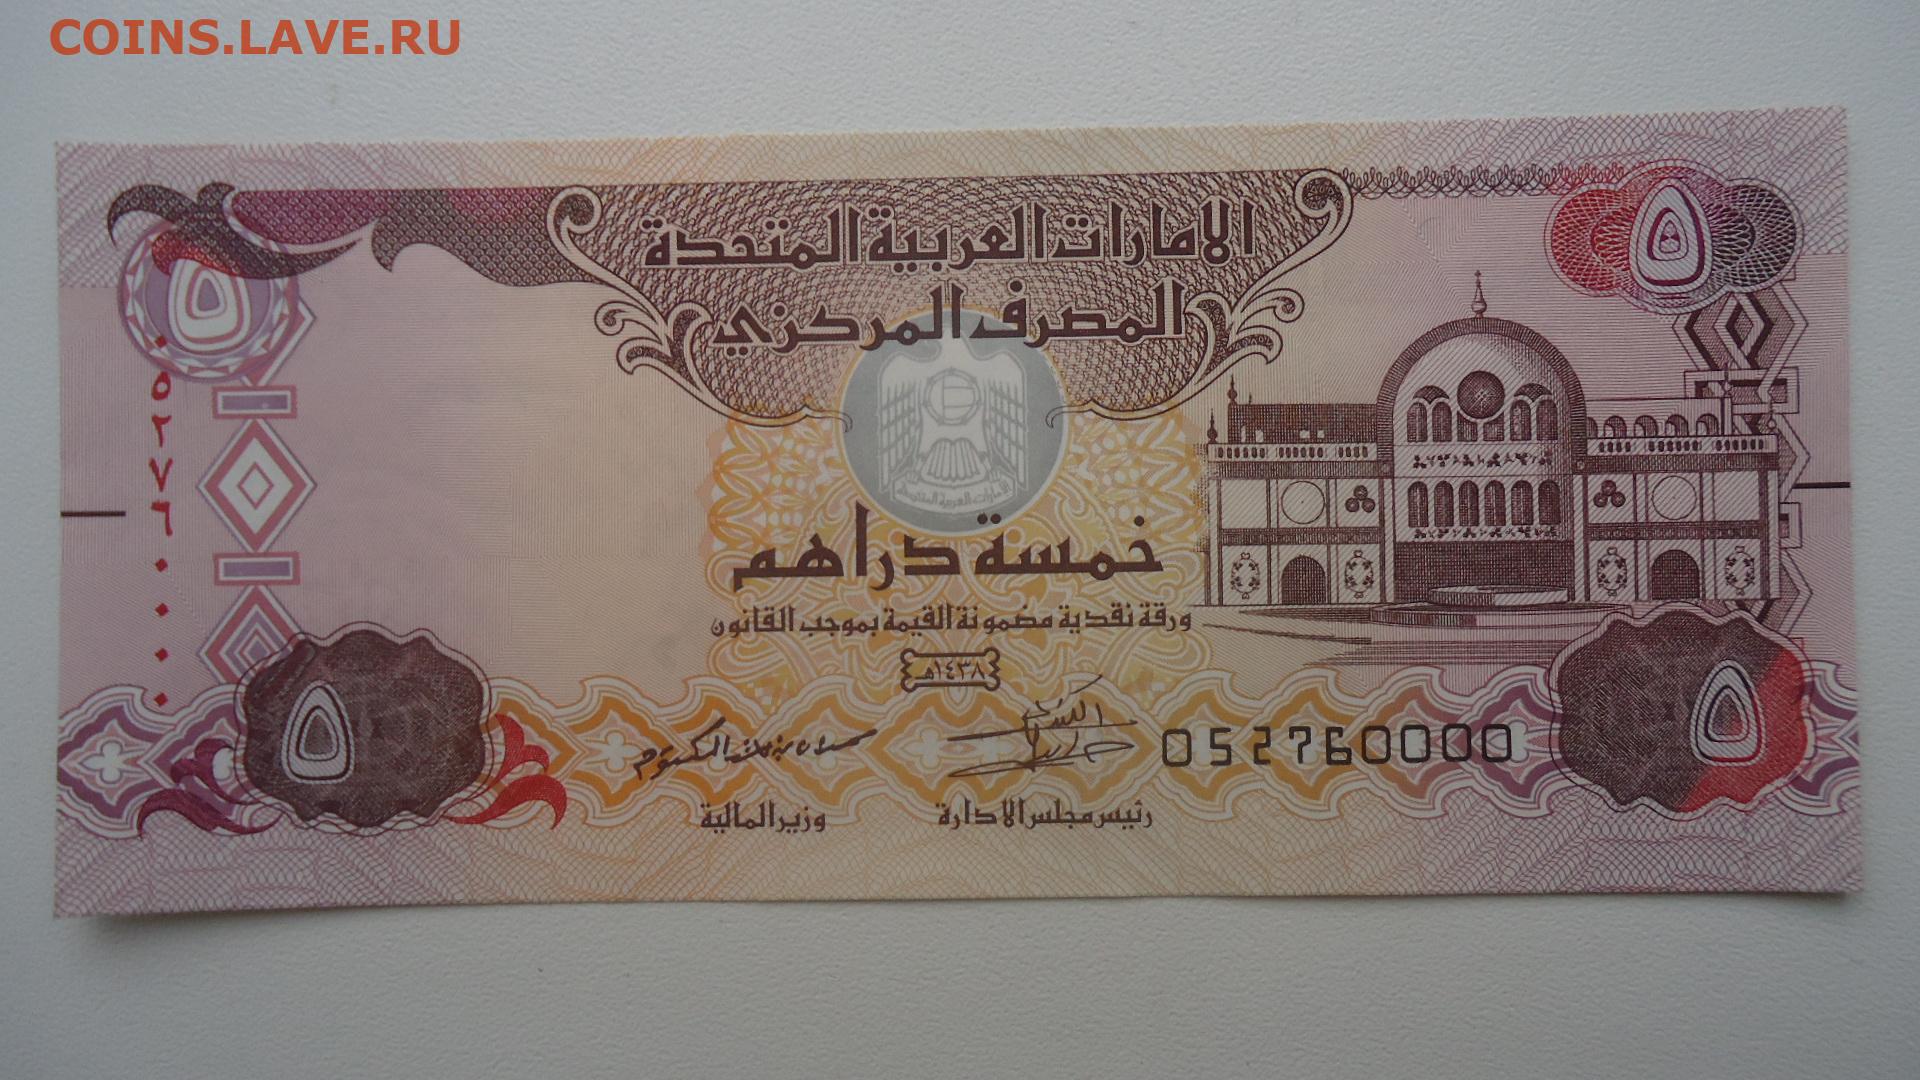 130 дирхам. 5 Дирхам ОАЭ. Банкнота ОАЭ 10 дирхам. 25 Дирхам Объединенные арабские эмираты. Дирхам ОАЭ К доллару США.